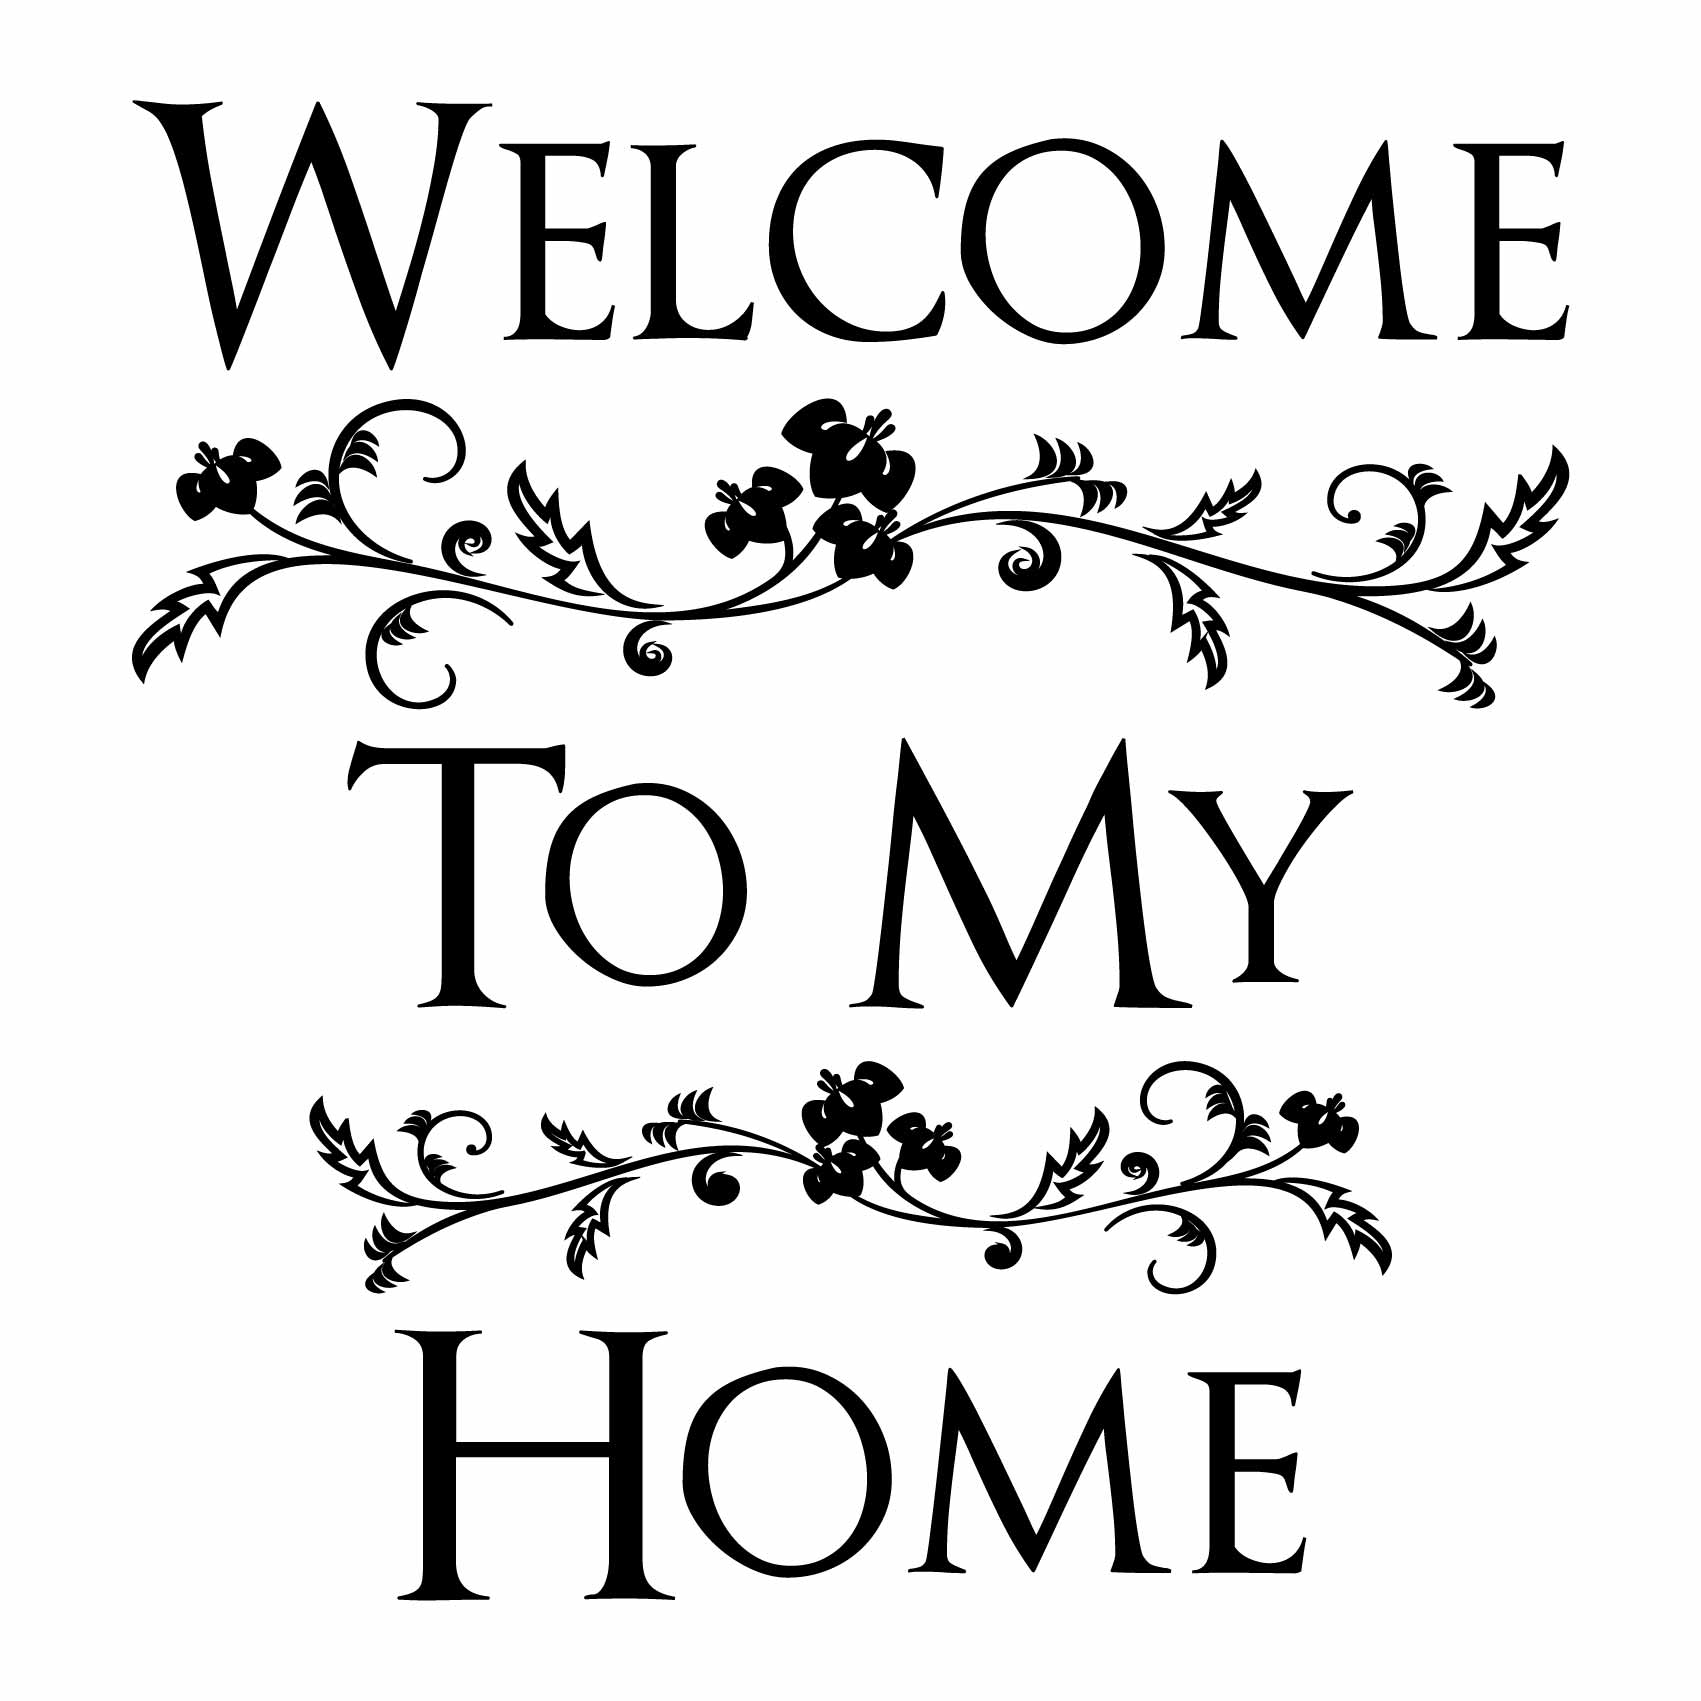 stickers-welcome-to-my-home-ref6welcome-autocollant-muraux-bienvenue-sticker-mural-welcome-home-sweet-home-entrée-séjour-salon-cuisine-porte-deco-(2)